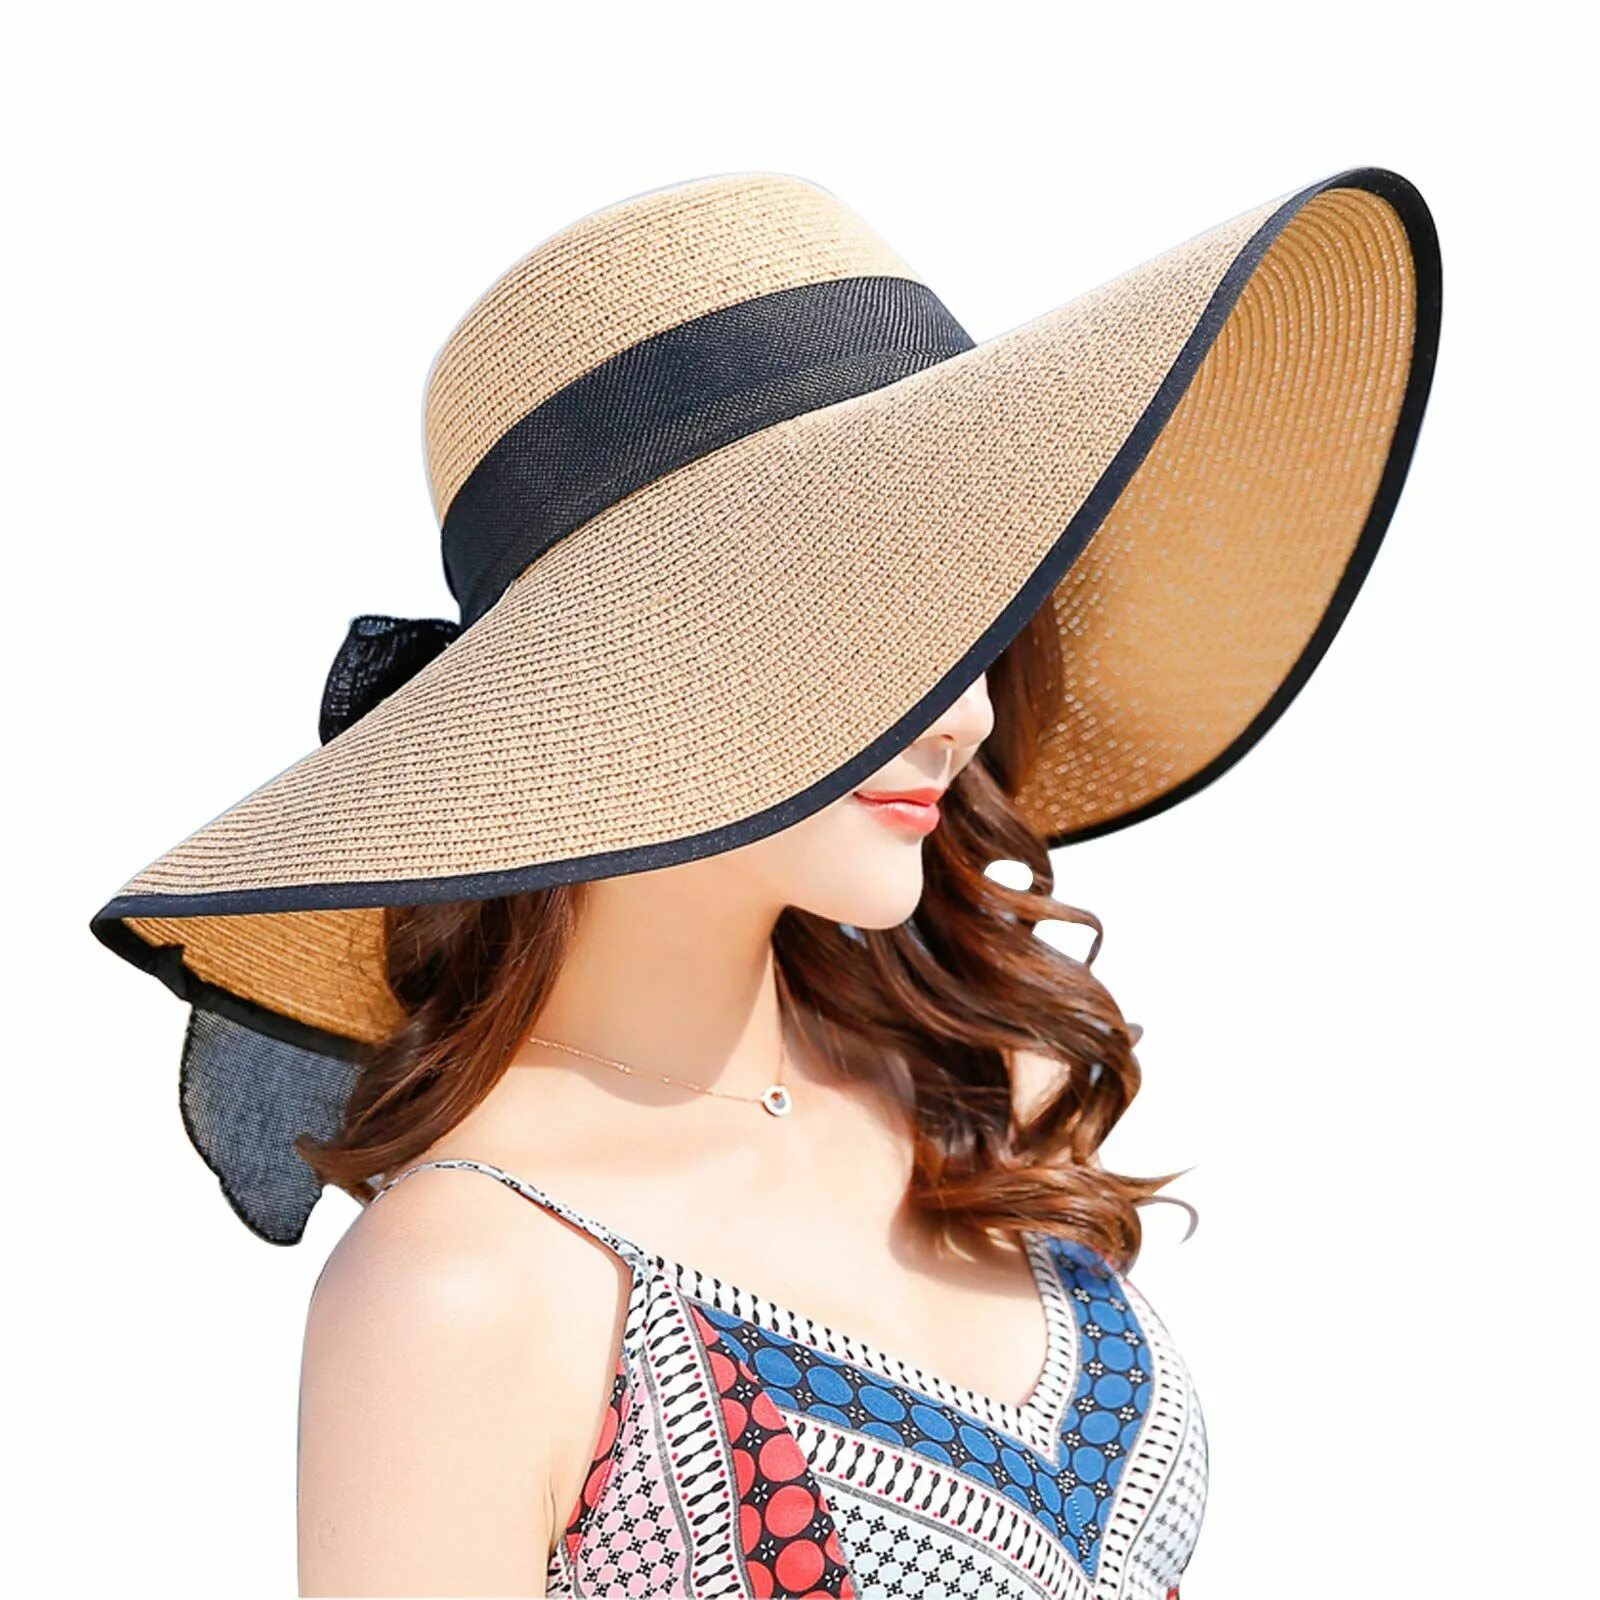 Солнечная шляпа. Панама широкополая женская. Широкополая шляпа Панама. Пляжная шляпа. Летняя шляпа.